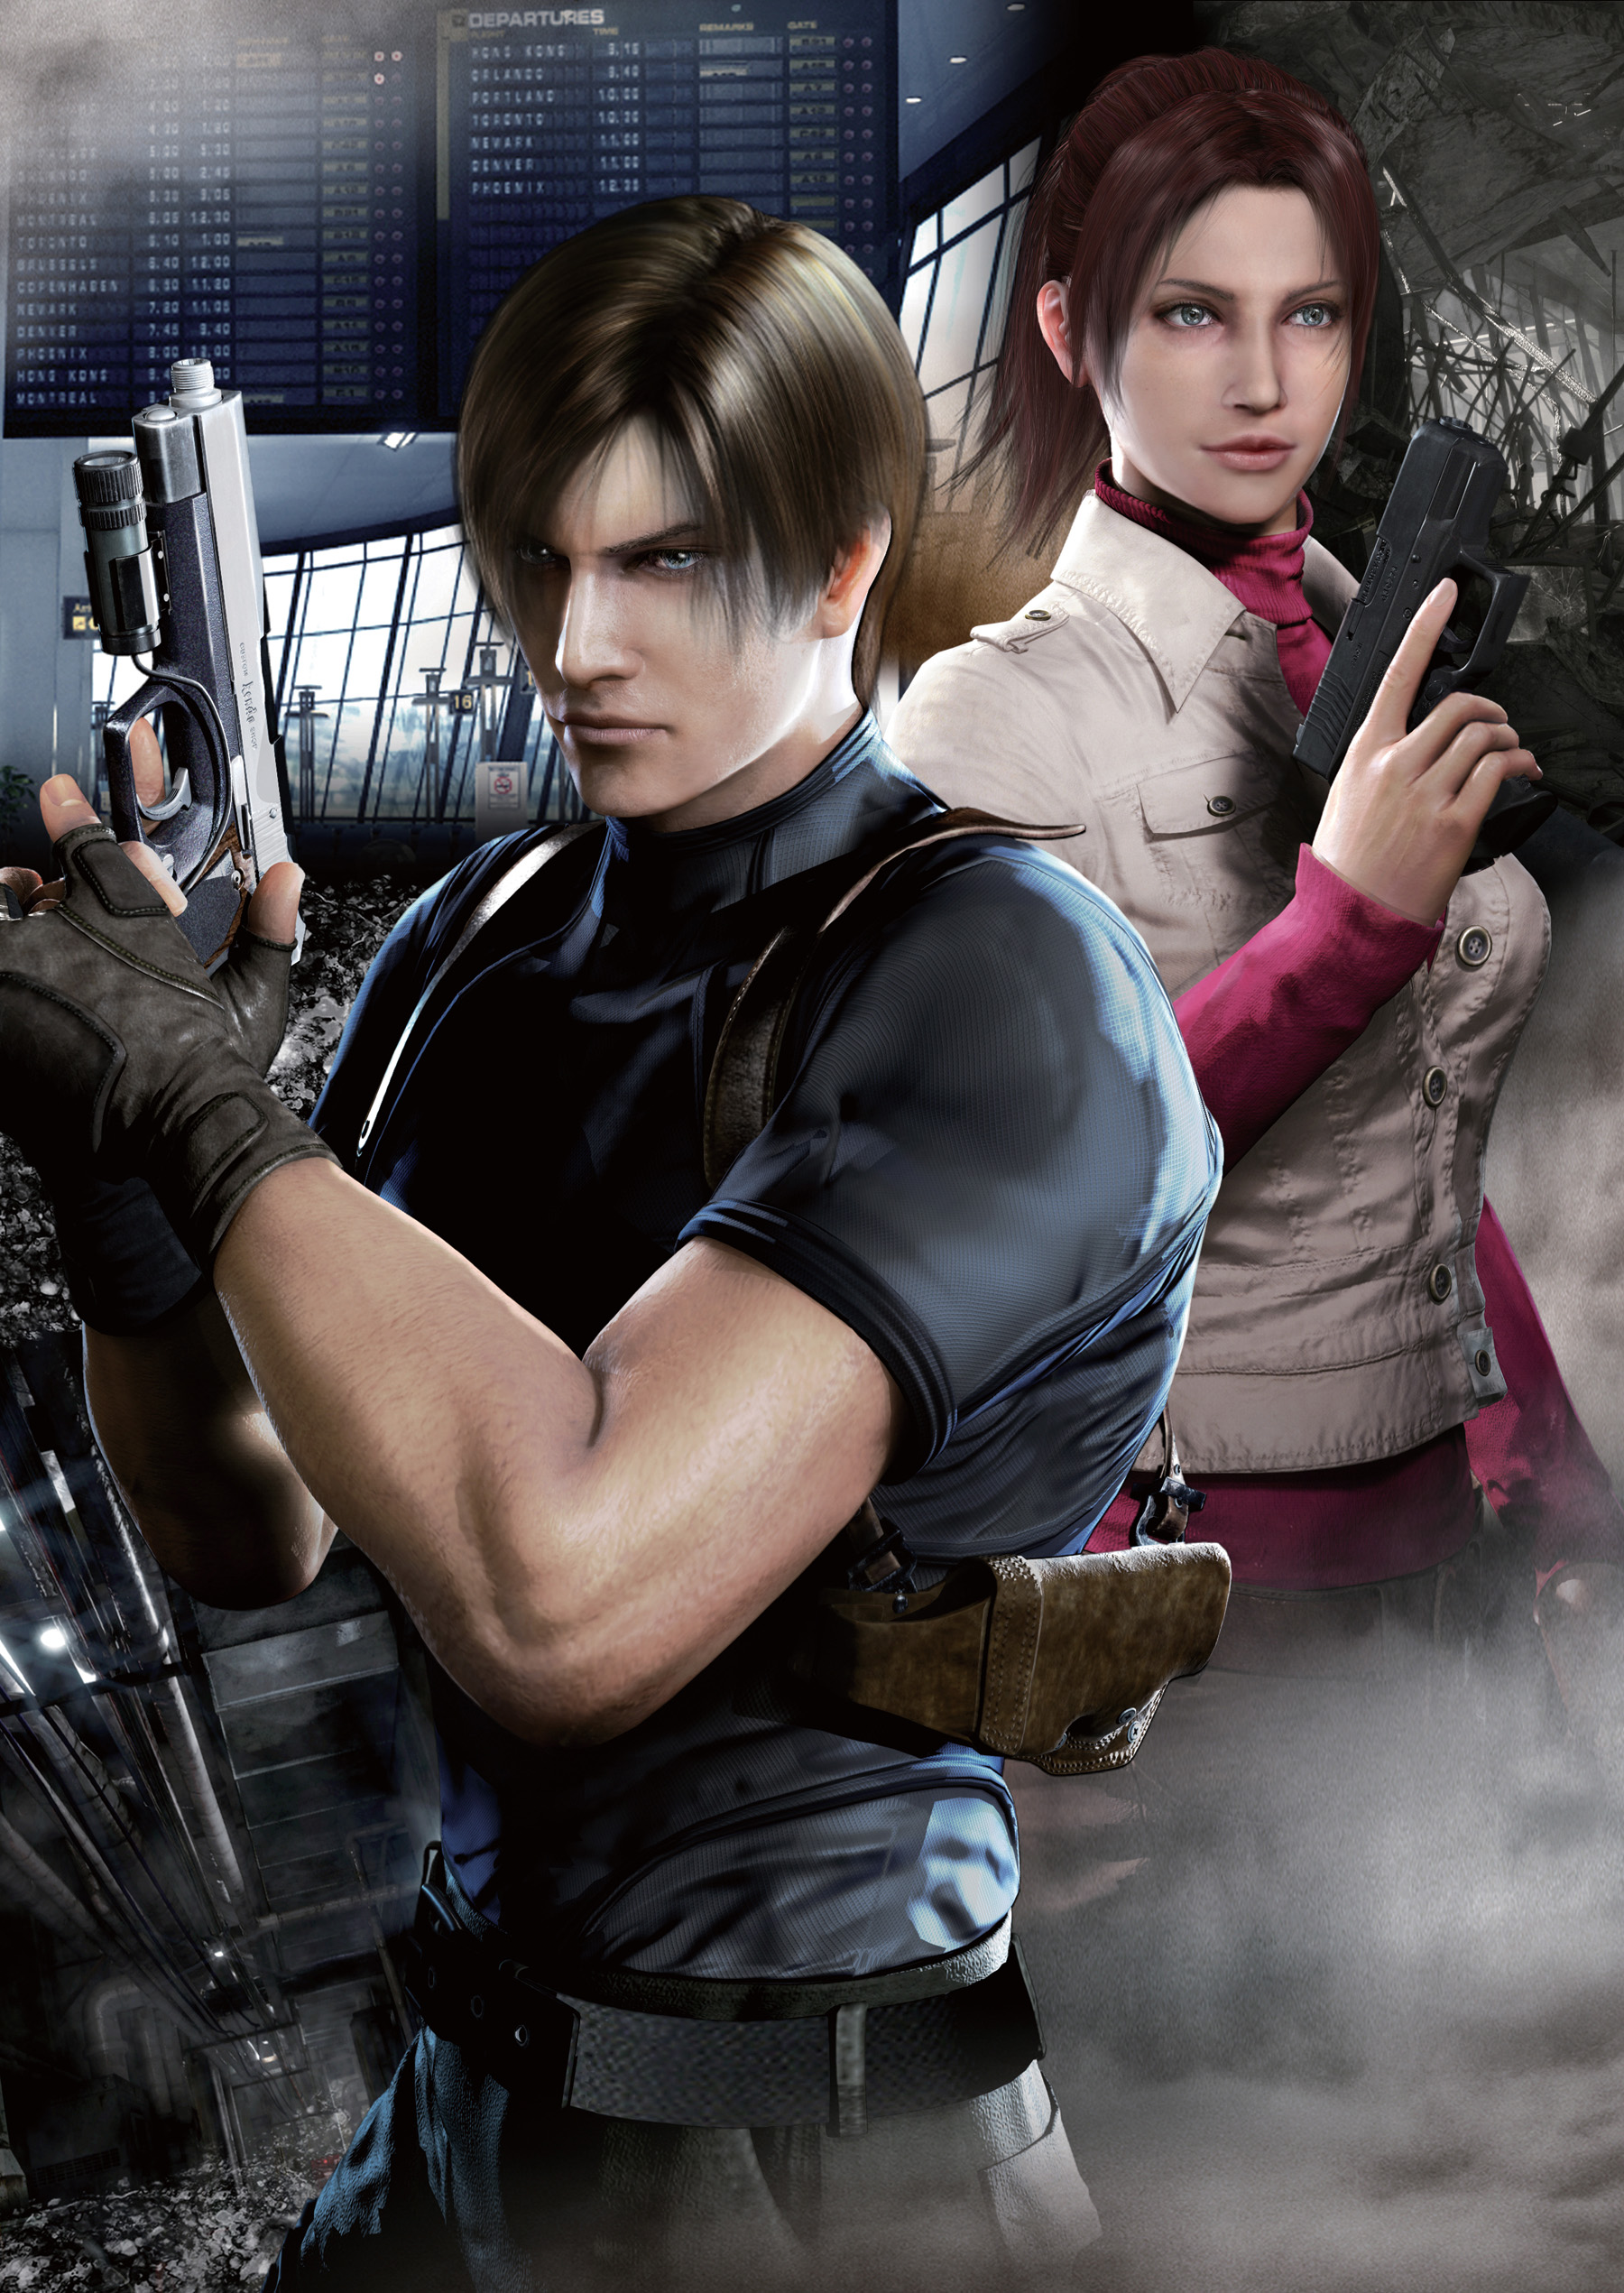 Jill e Leon trabalham Juntos - Resident Evil: Death Island (2023) Dublado 